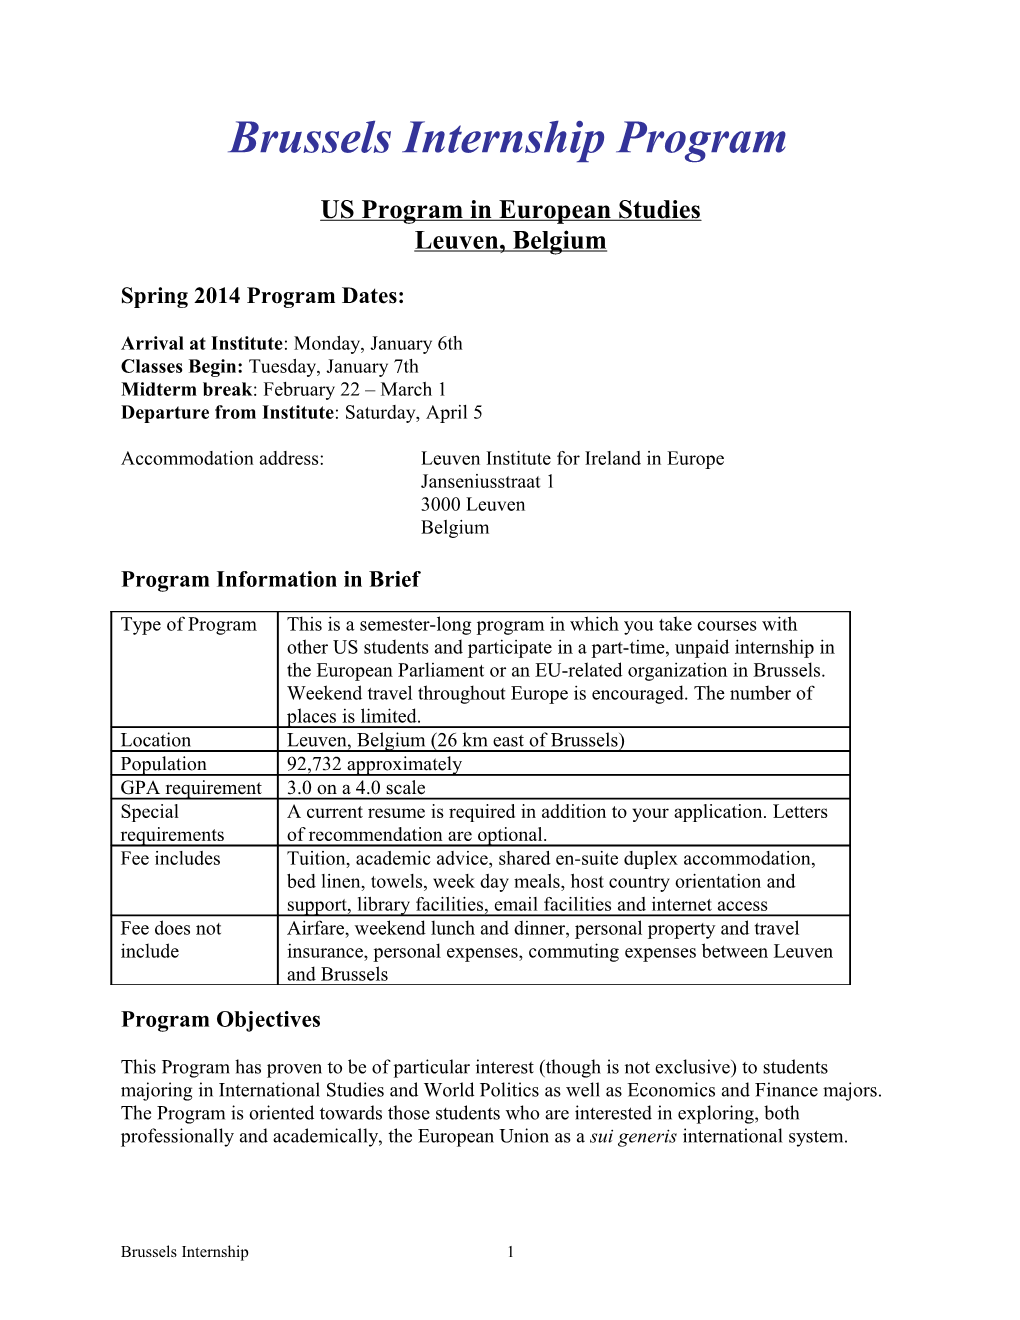 US Programme in European Studies